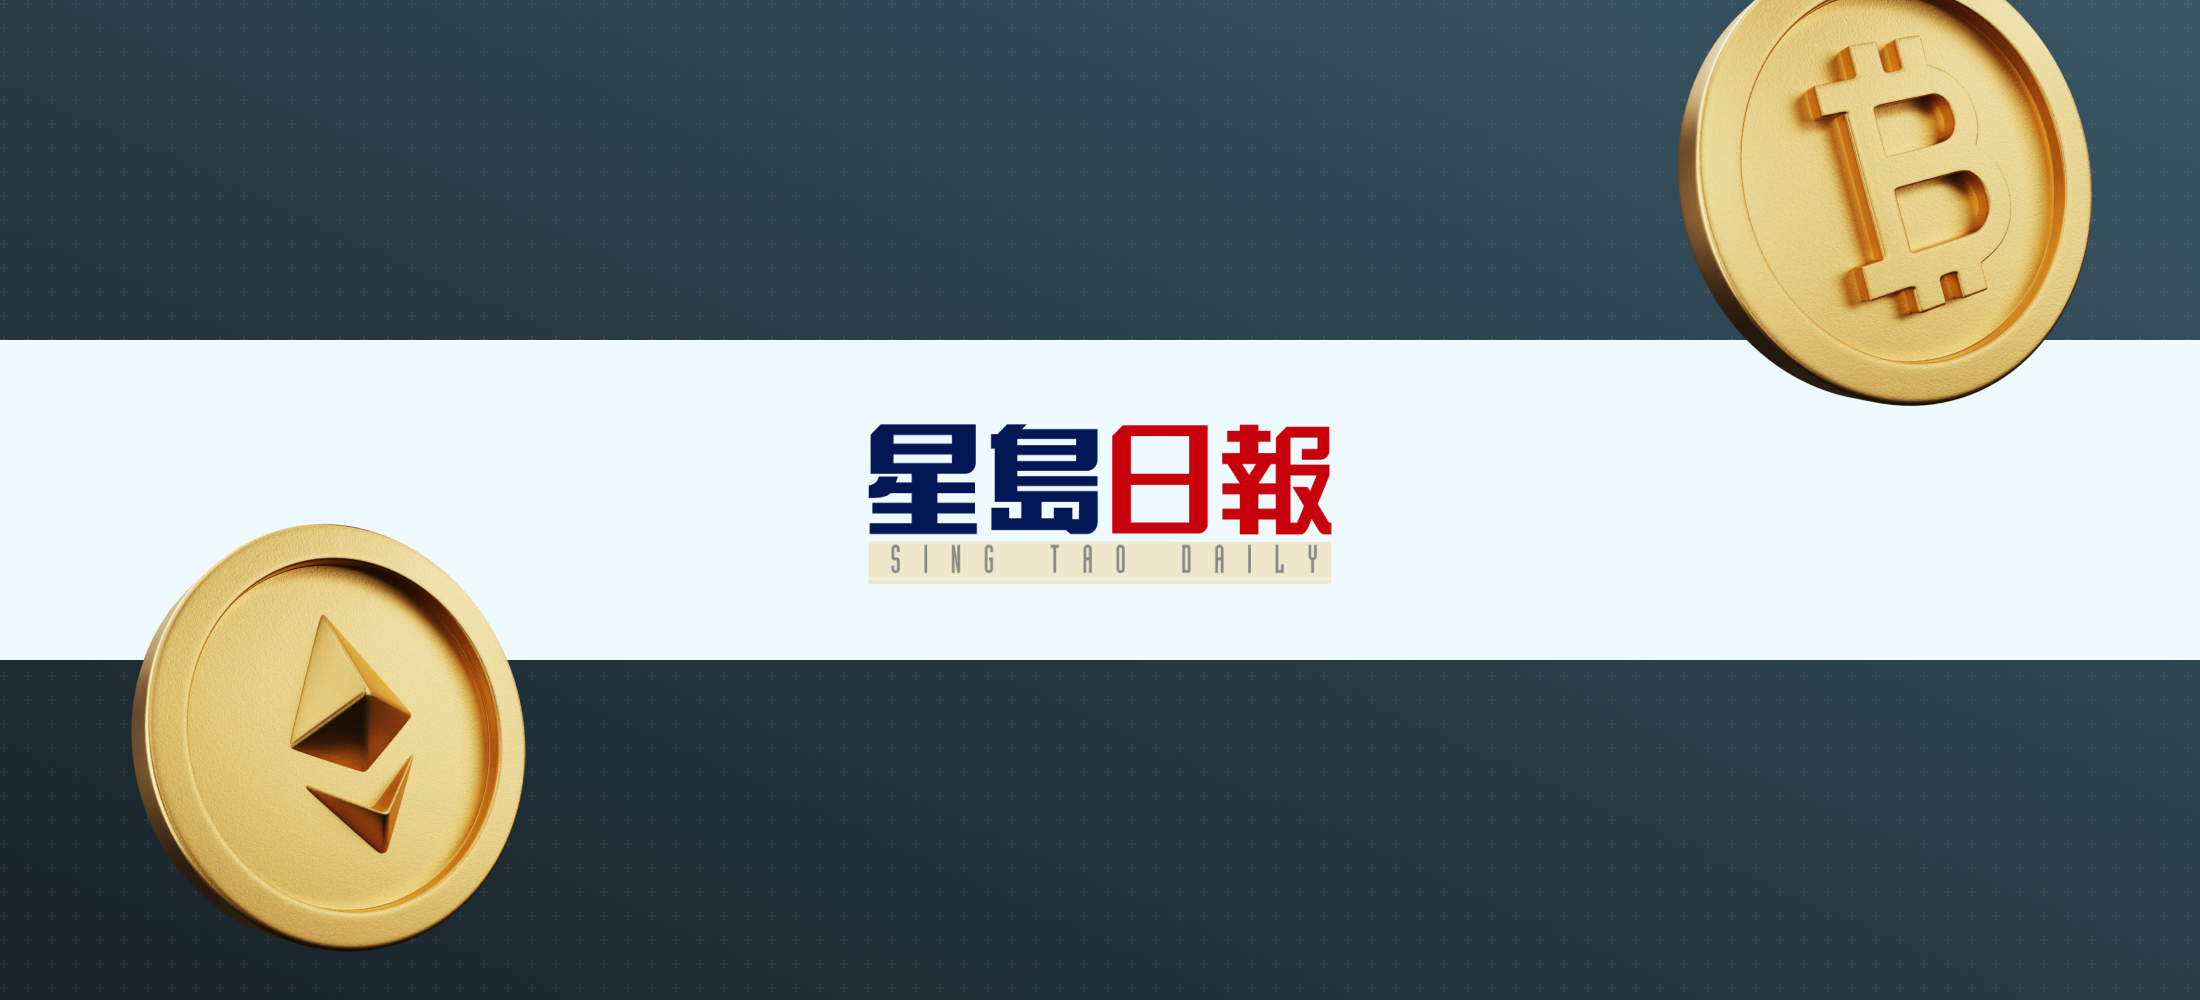 News Mention Template v1.0 - Singtao Daily